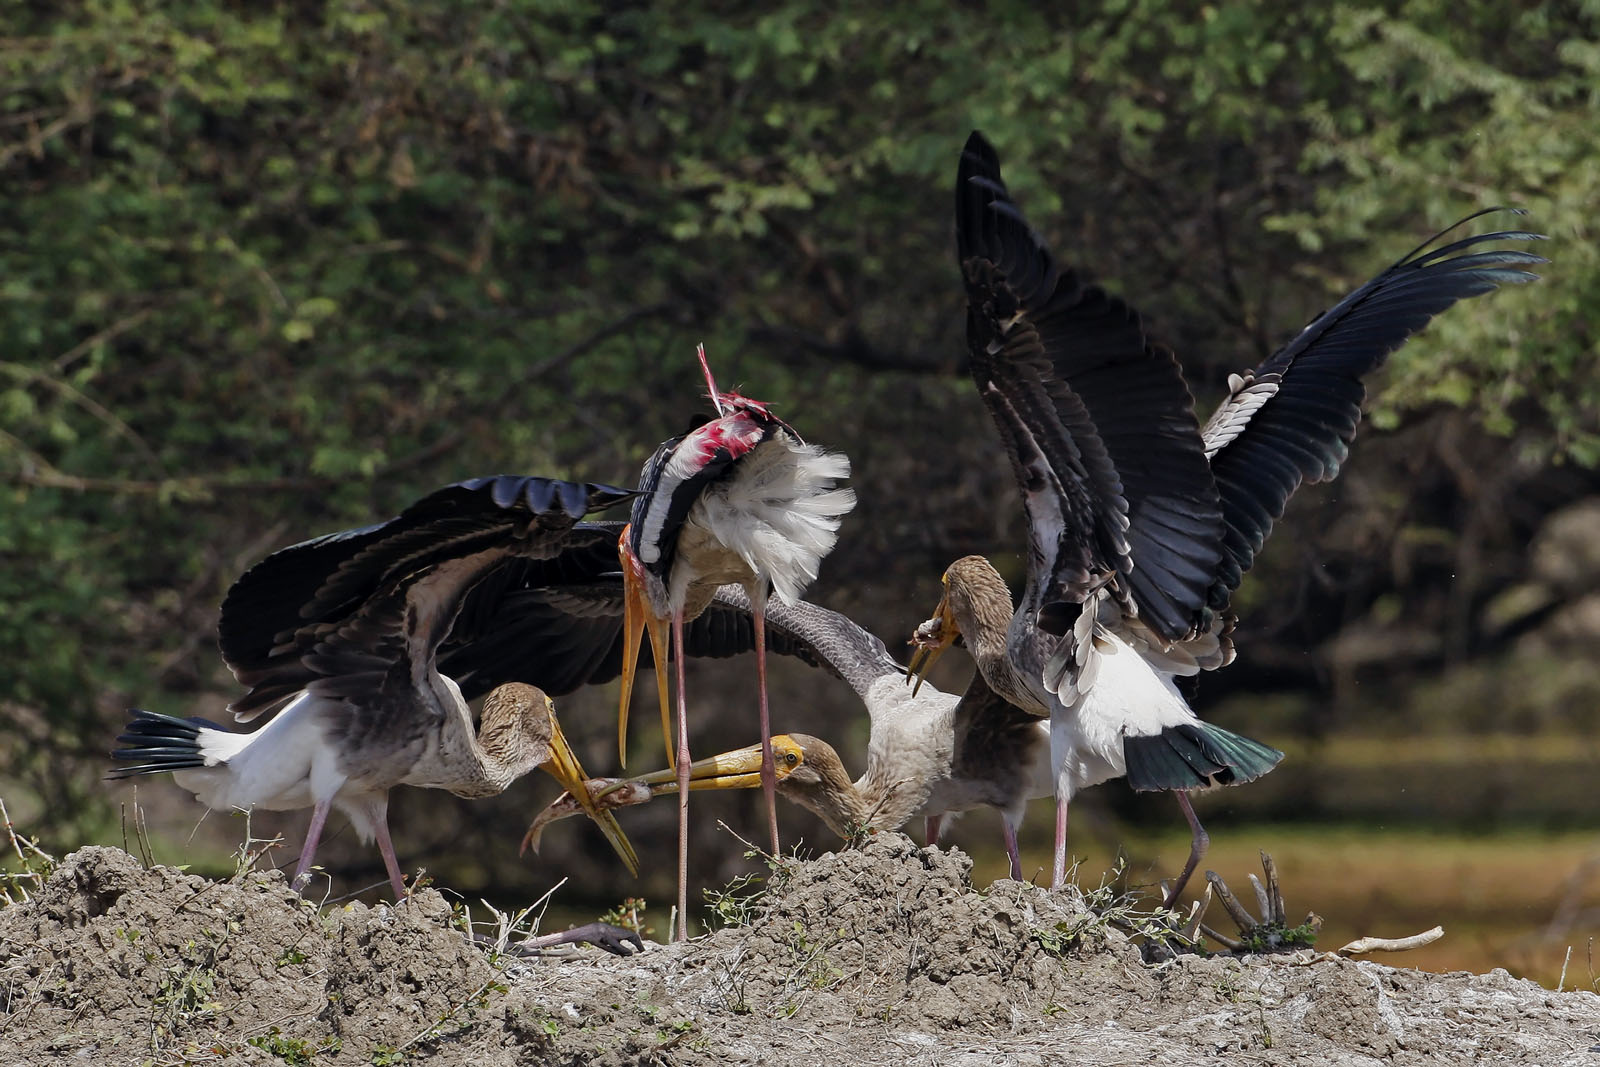 Juvenile Painted Storks (Mycteria leucocephala) Squabble over Fish Just Regurgitated by Parent, Bhar